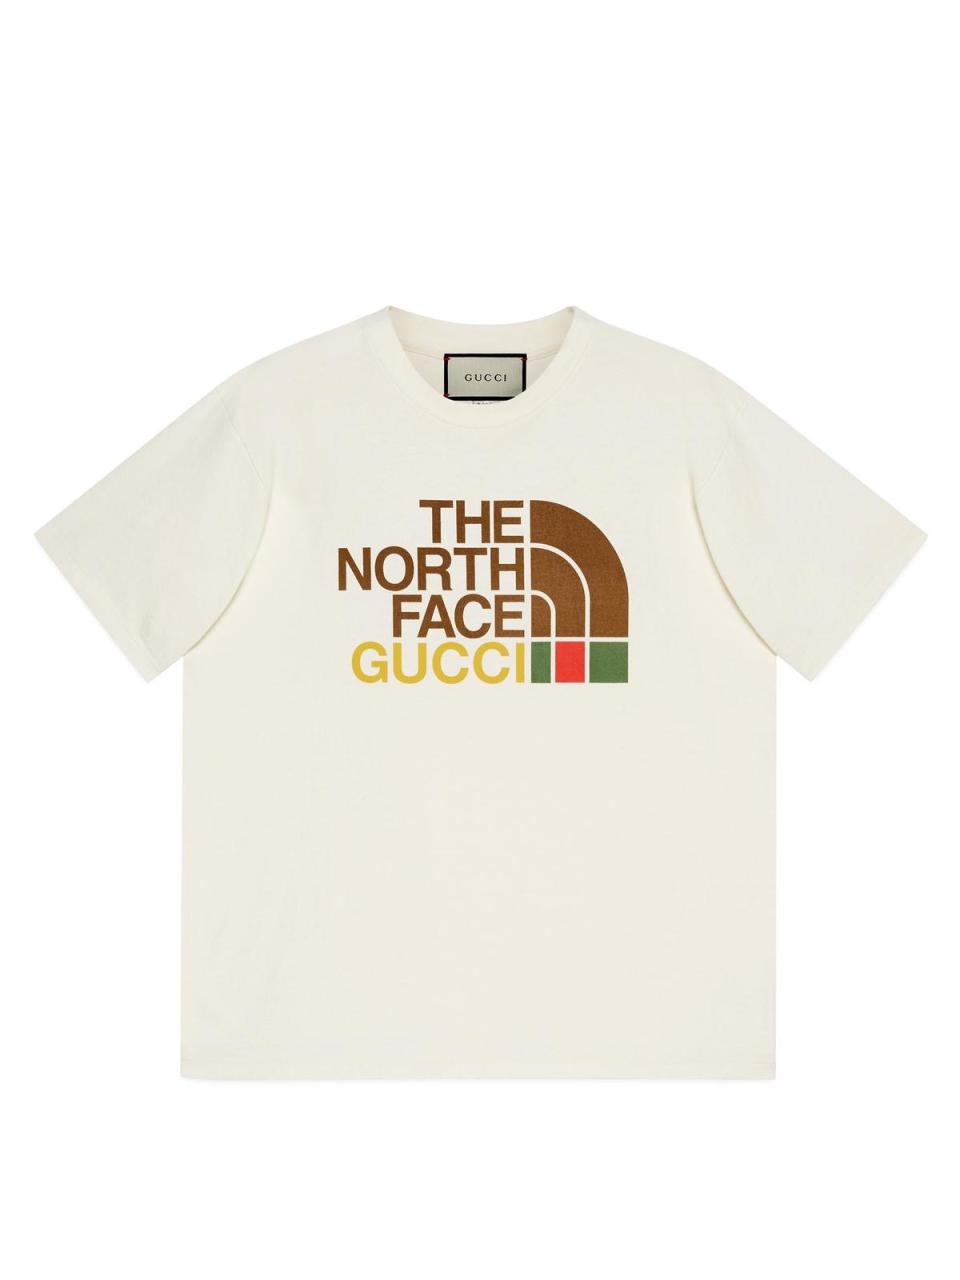 The North Face x Gucci 聯名短版 T-Shirt NT$19,500。（Gucci提供）